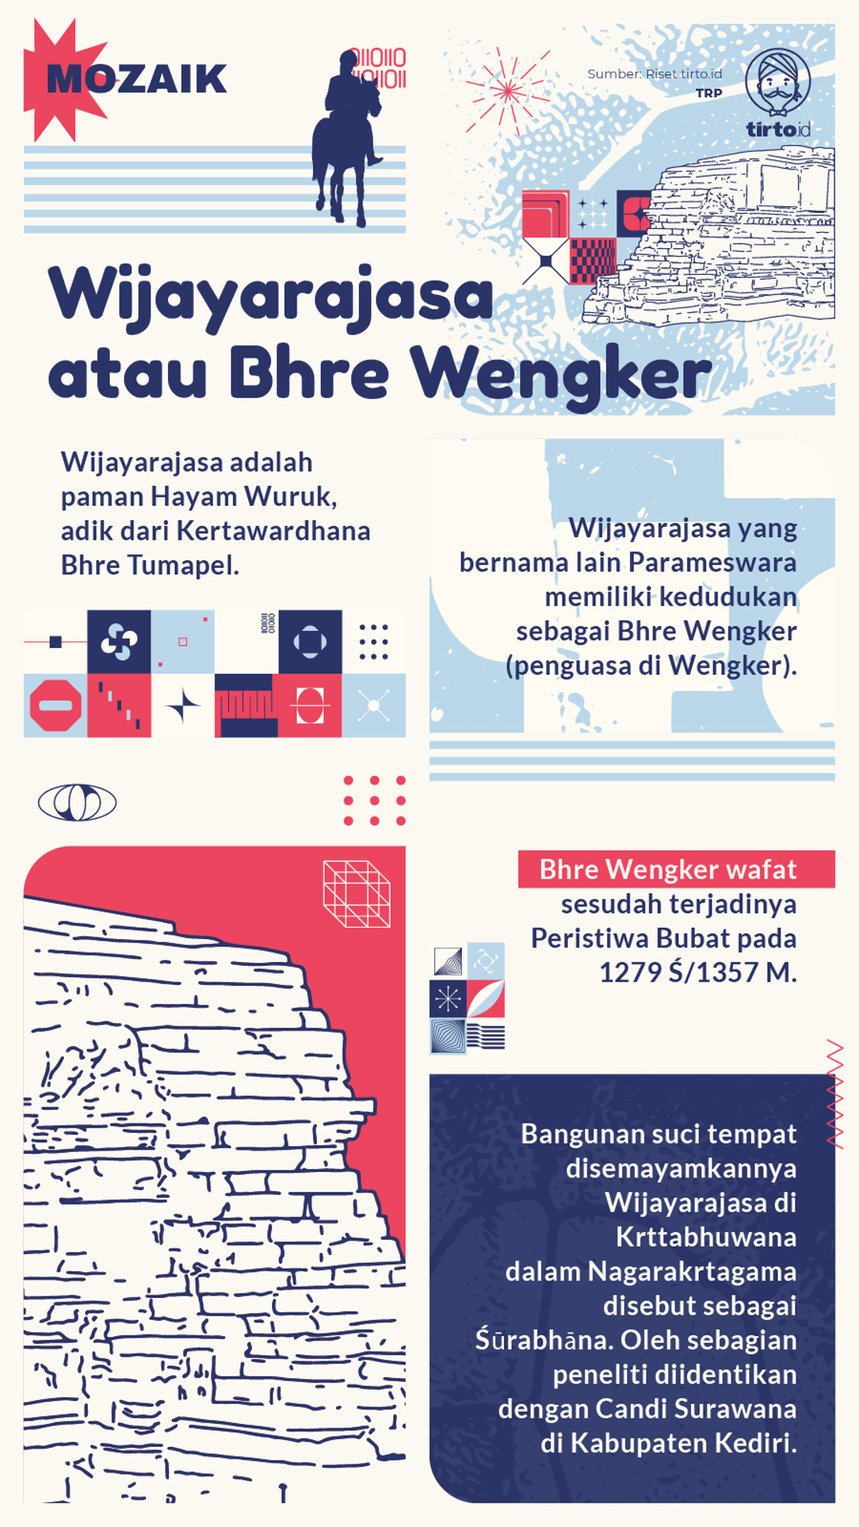 Infografik Mozaik Wijayarajasa atau Bhre Wengker